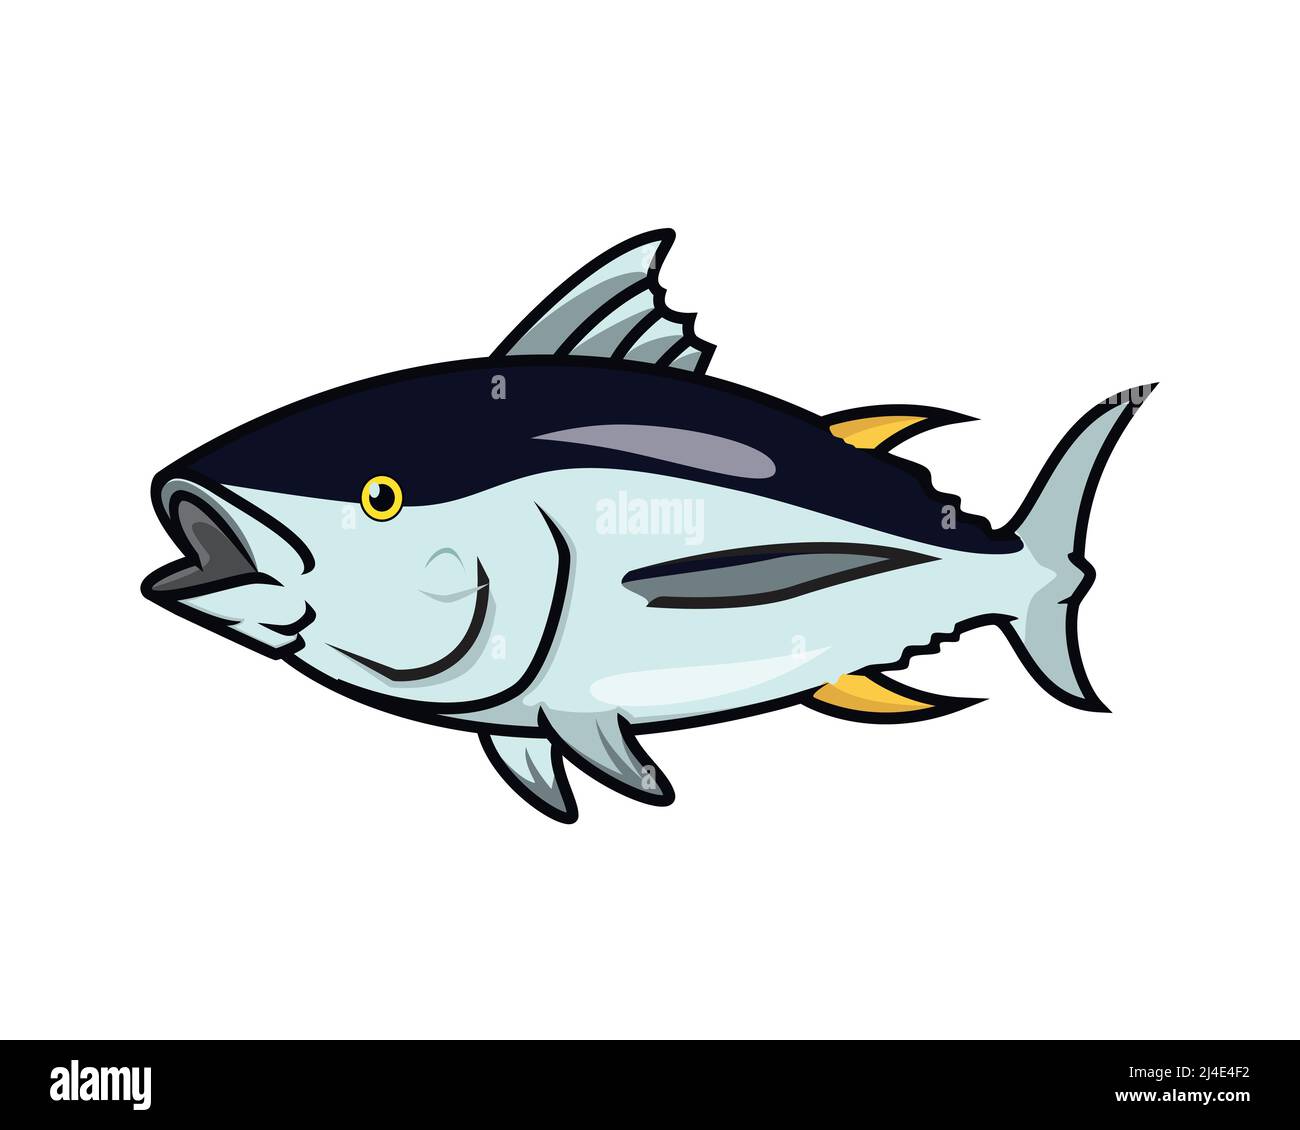 Detaillierte Yellowfin Thunfisch und Meerestierentitel Illustration Vektor Stock Vektor